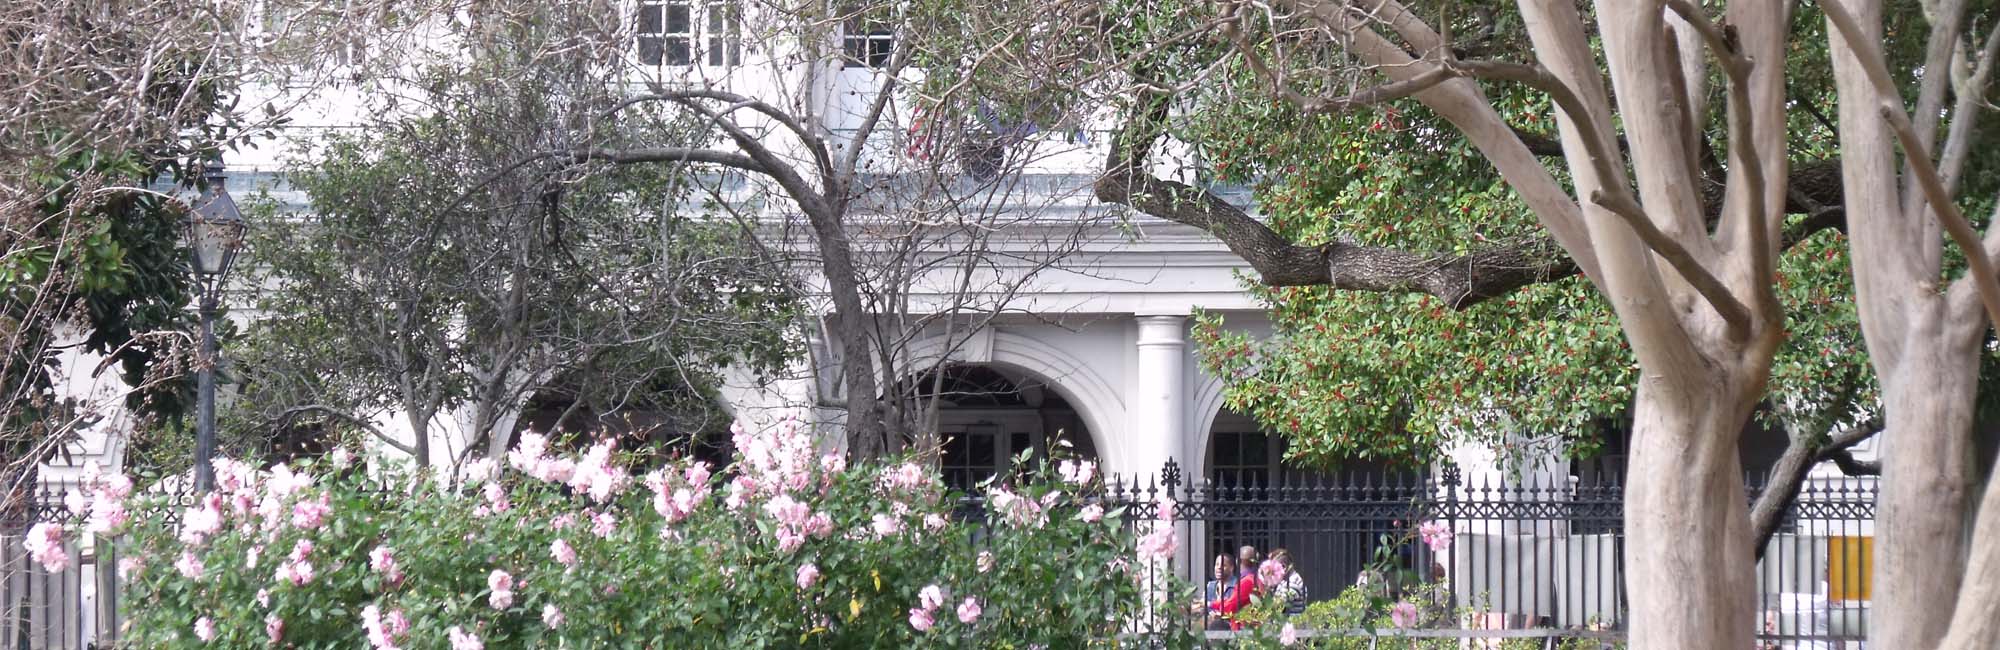 Magnolias in New Orleans